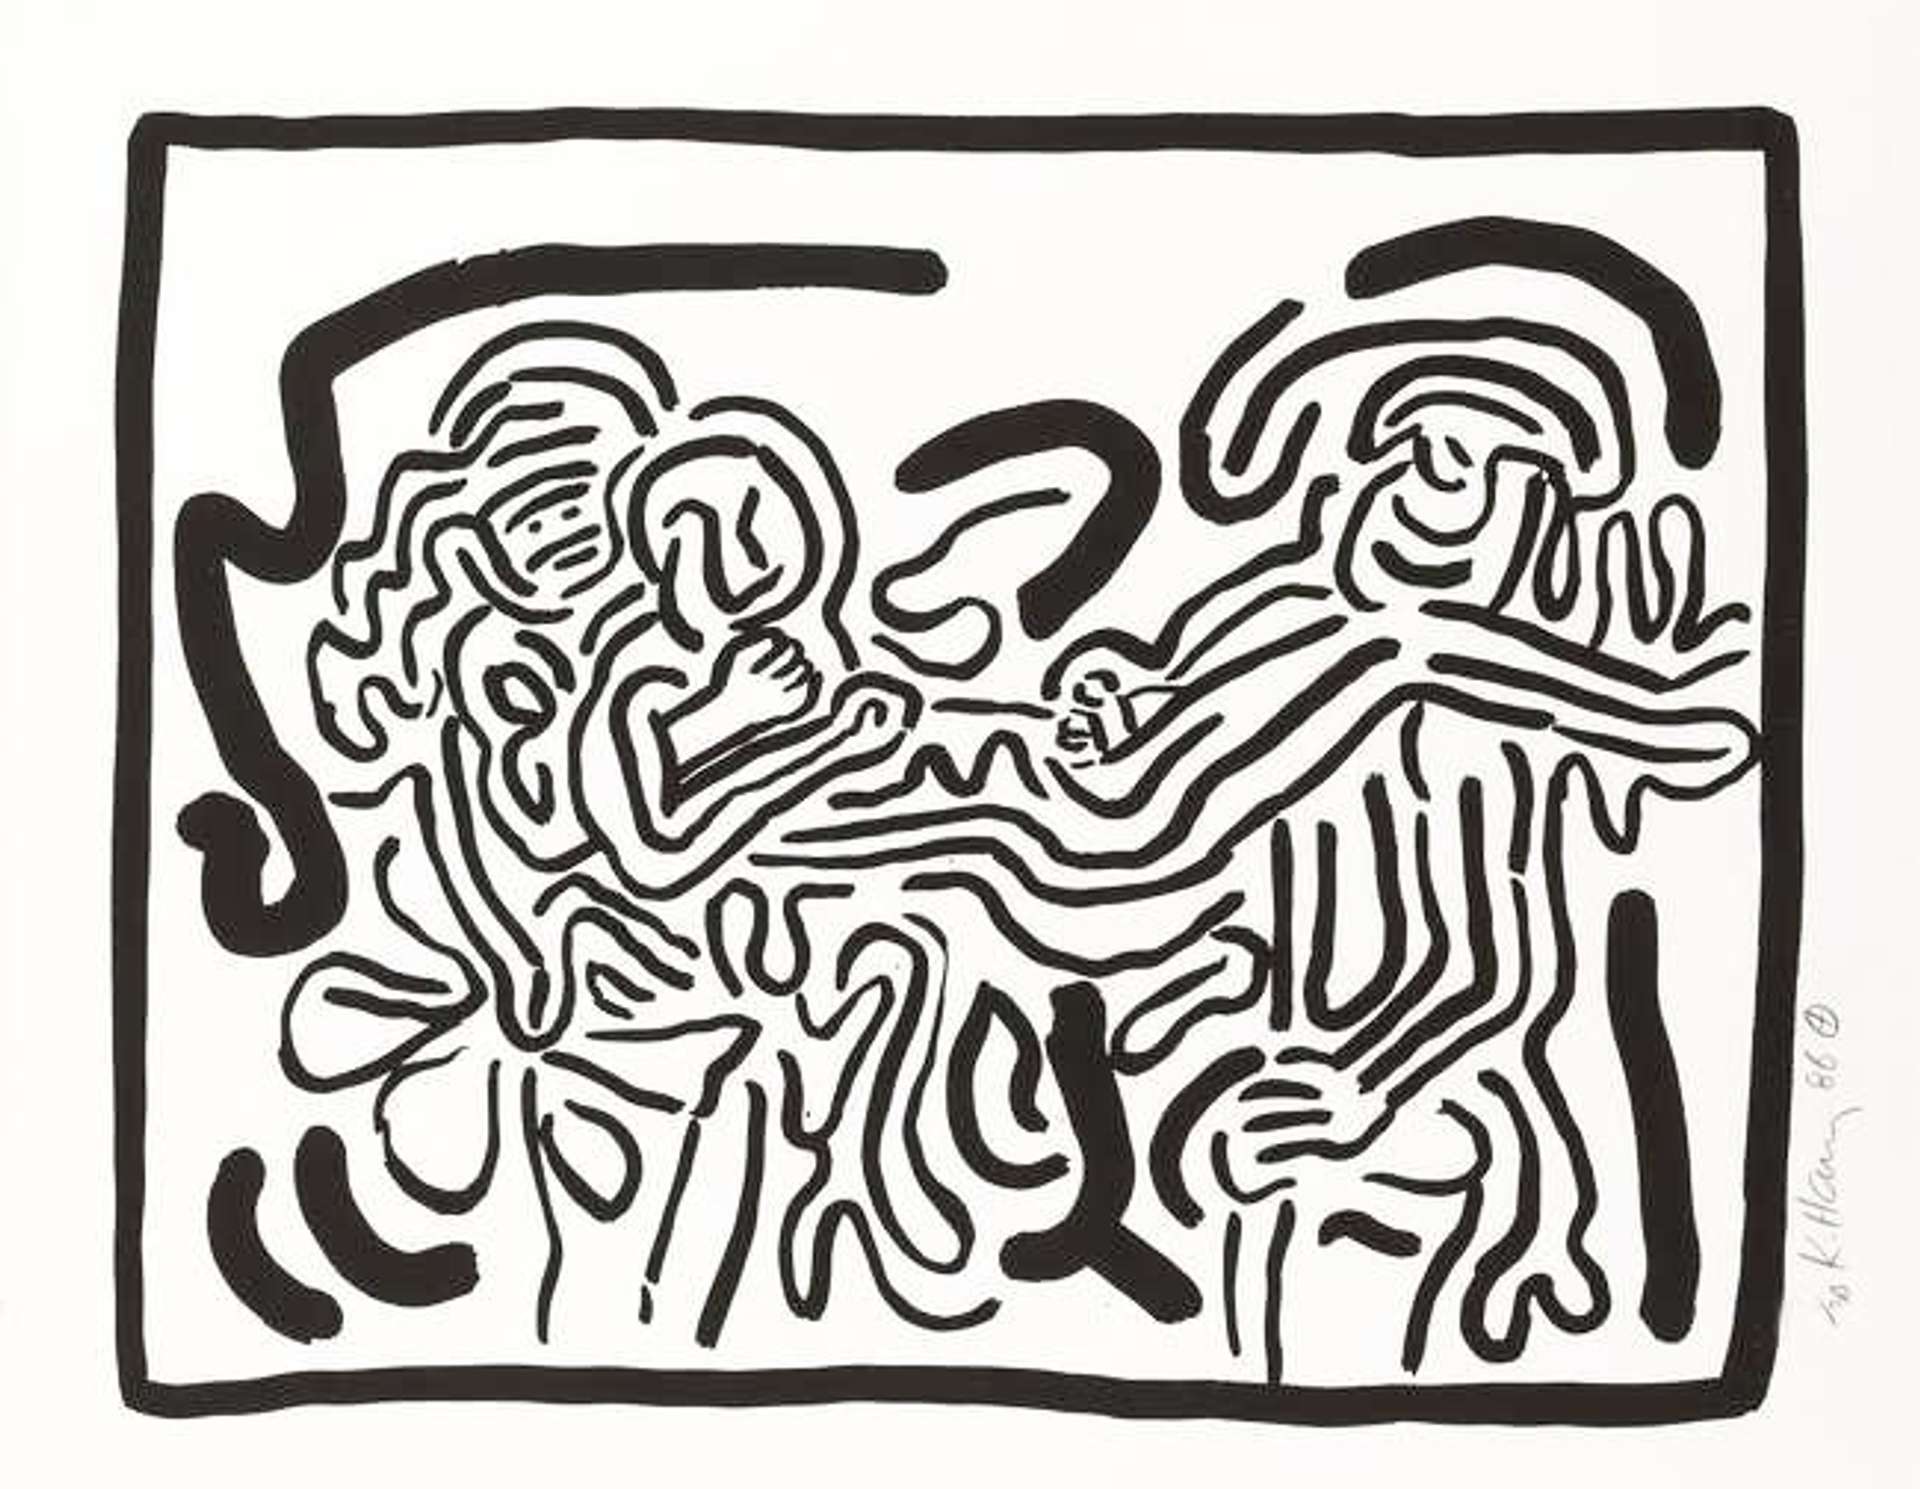 Bad Boys 1 - Signed Print by Keith Haring 1986 - MyArtBroker